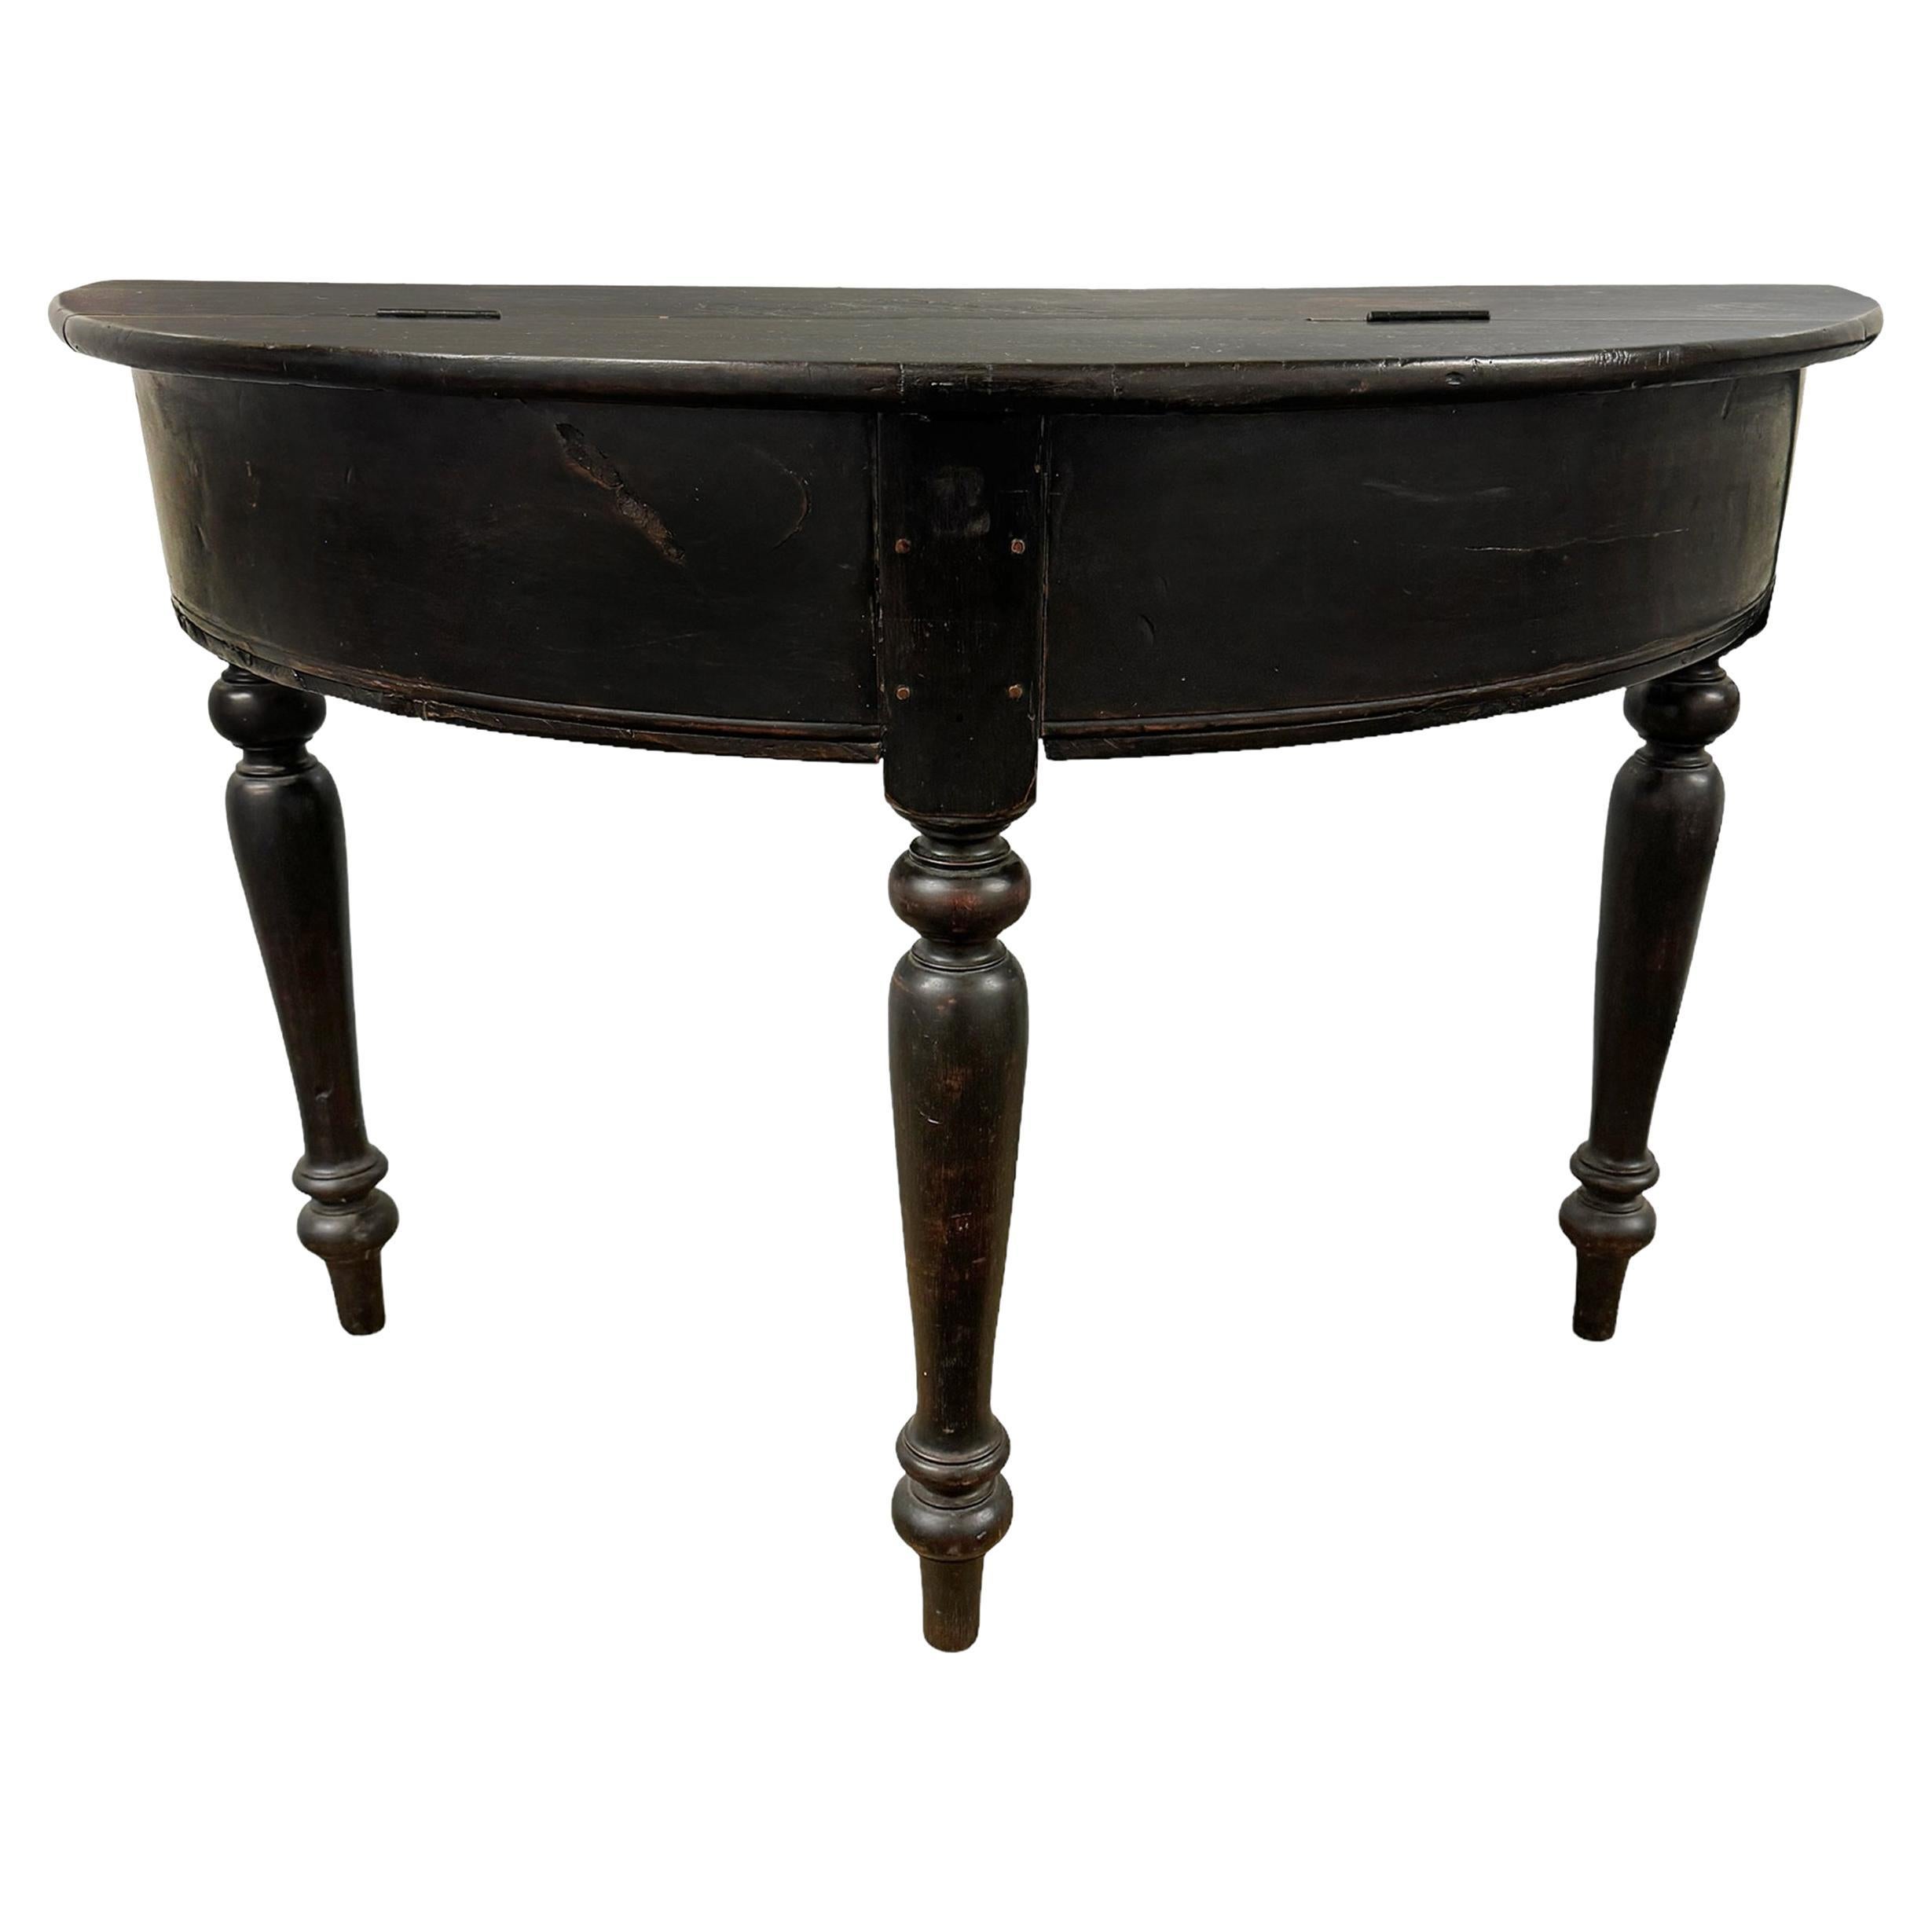 19th Century American Demilune Table